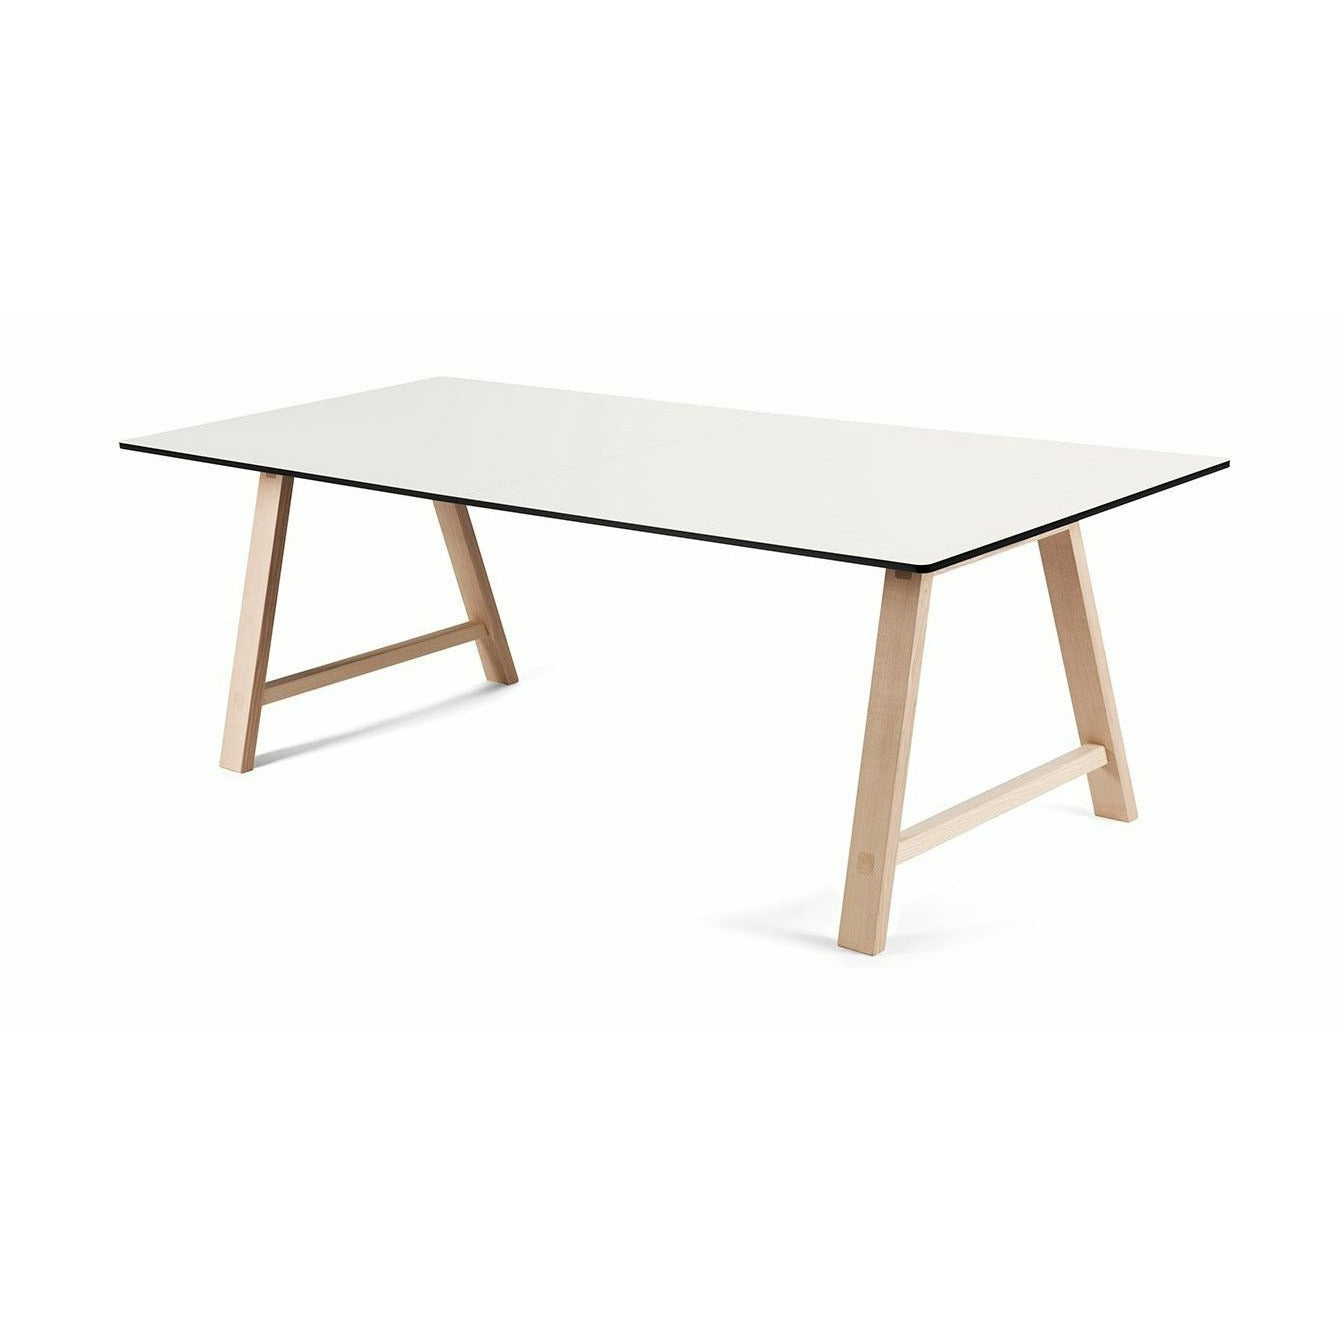 Andersen Furniture T1 Extendable Table, White Laminat, Soaped Oak, 220cm